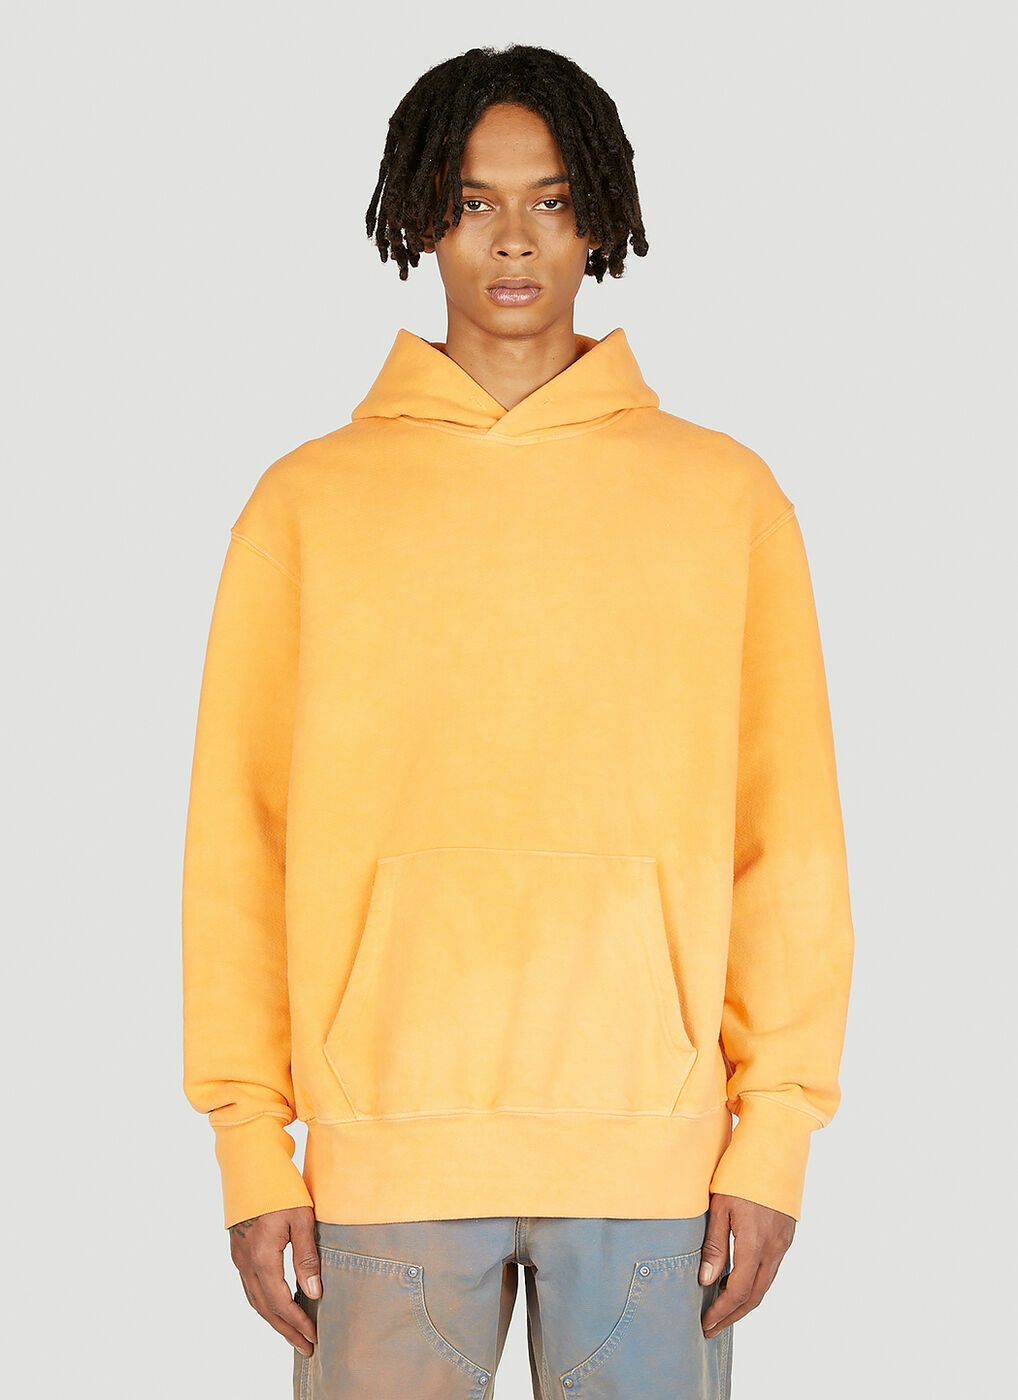 NOTSONORMAL - Splashed Hooded Sweatshirt in Orange NOTSONORMAL